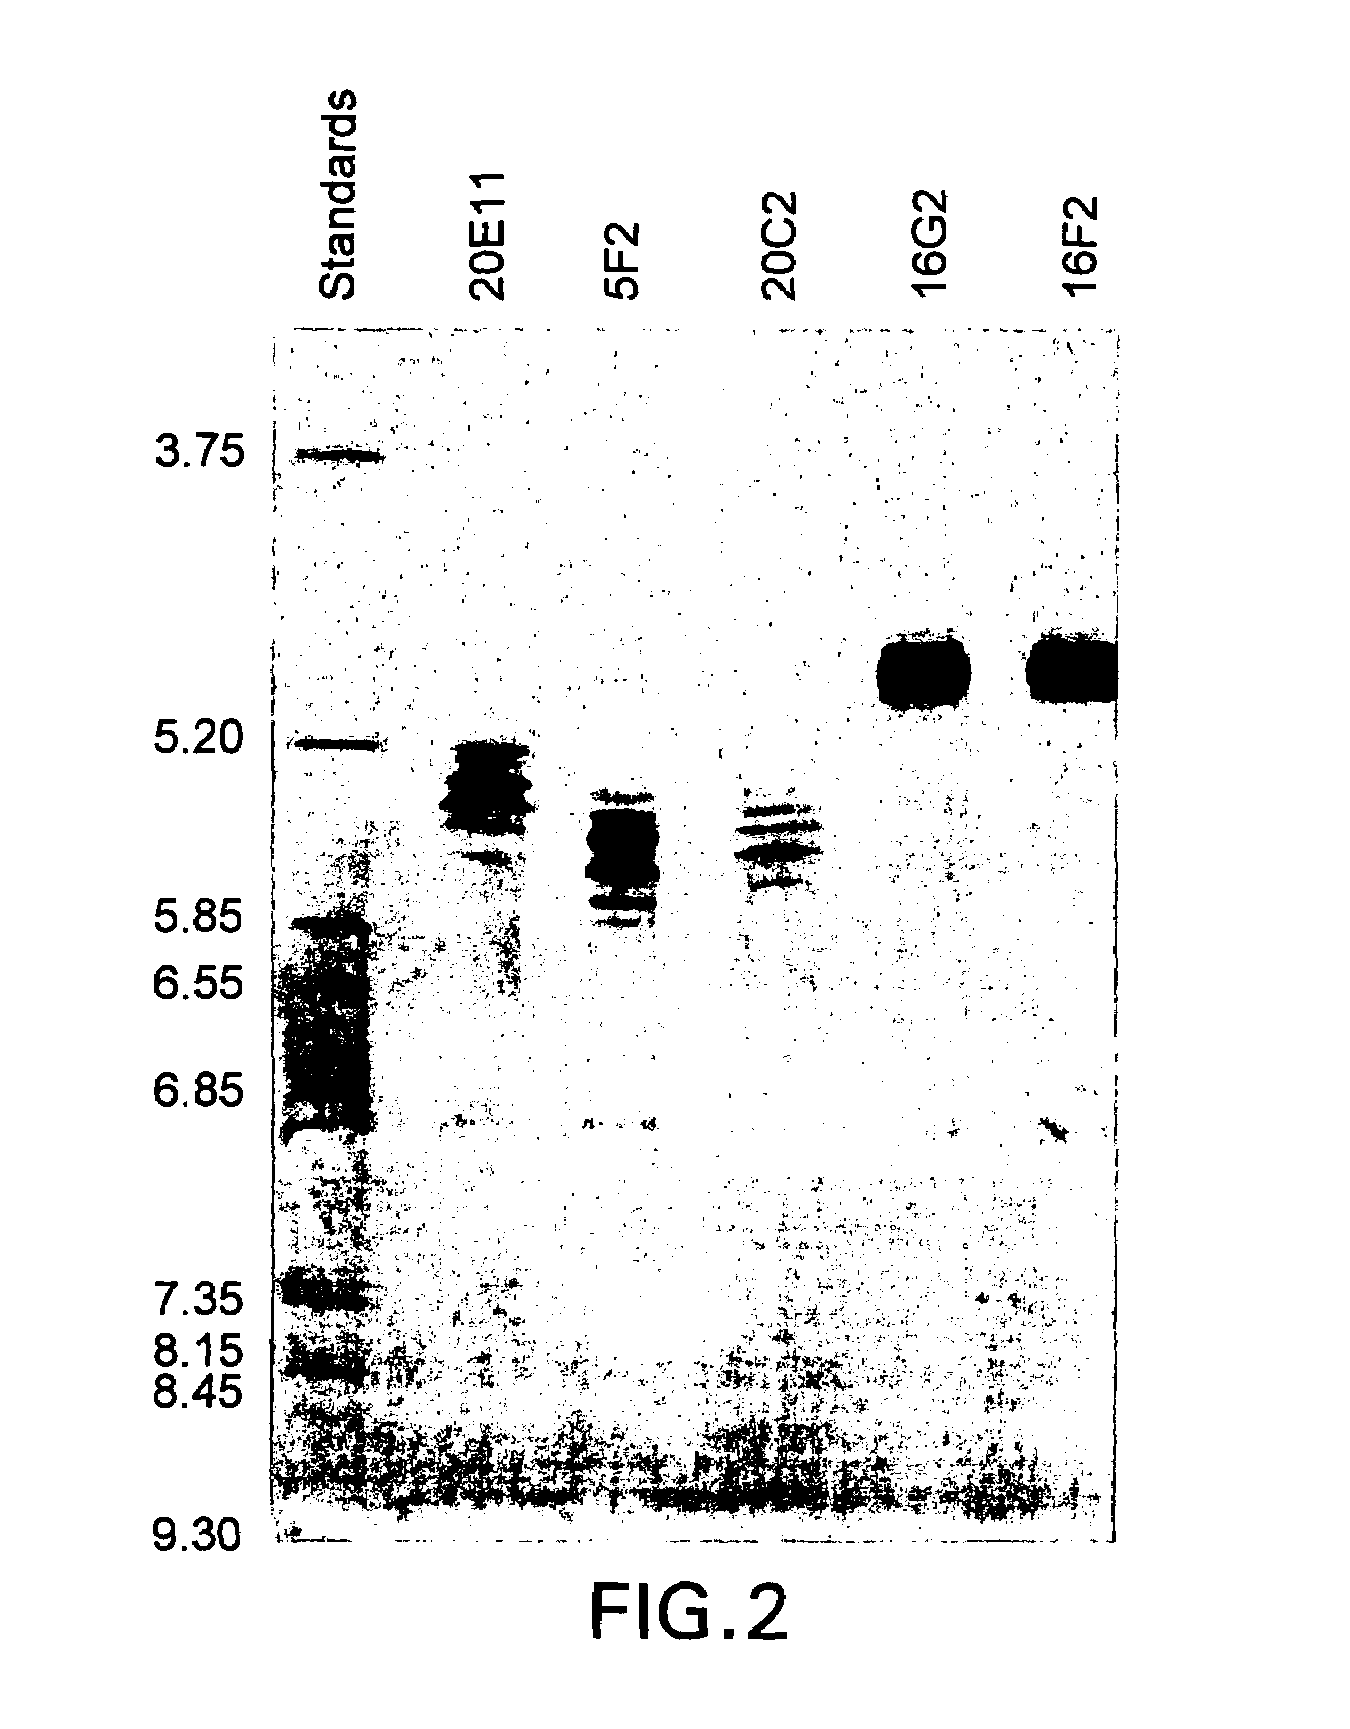 Antibodies against human IL-12